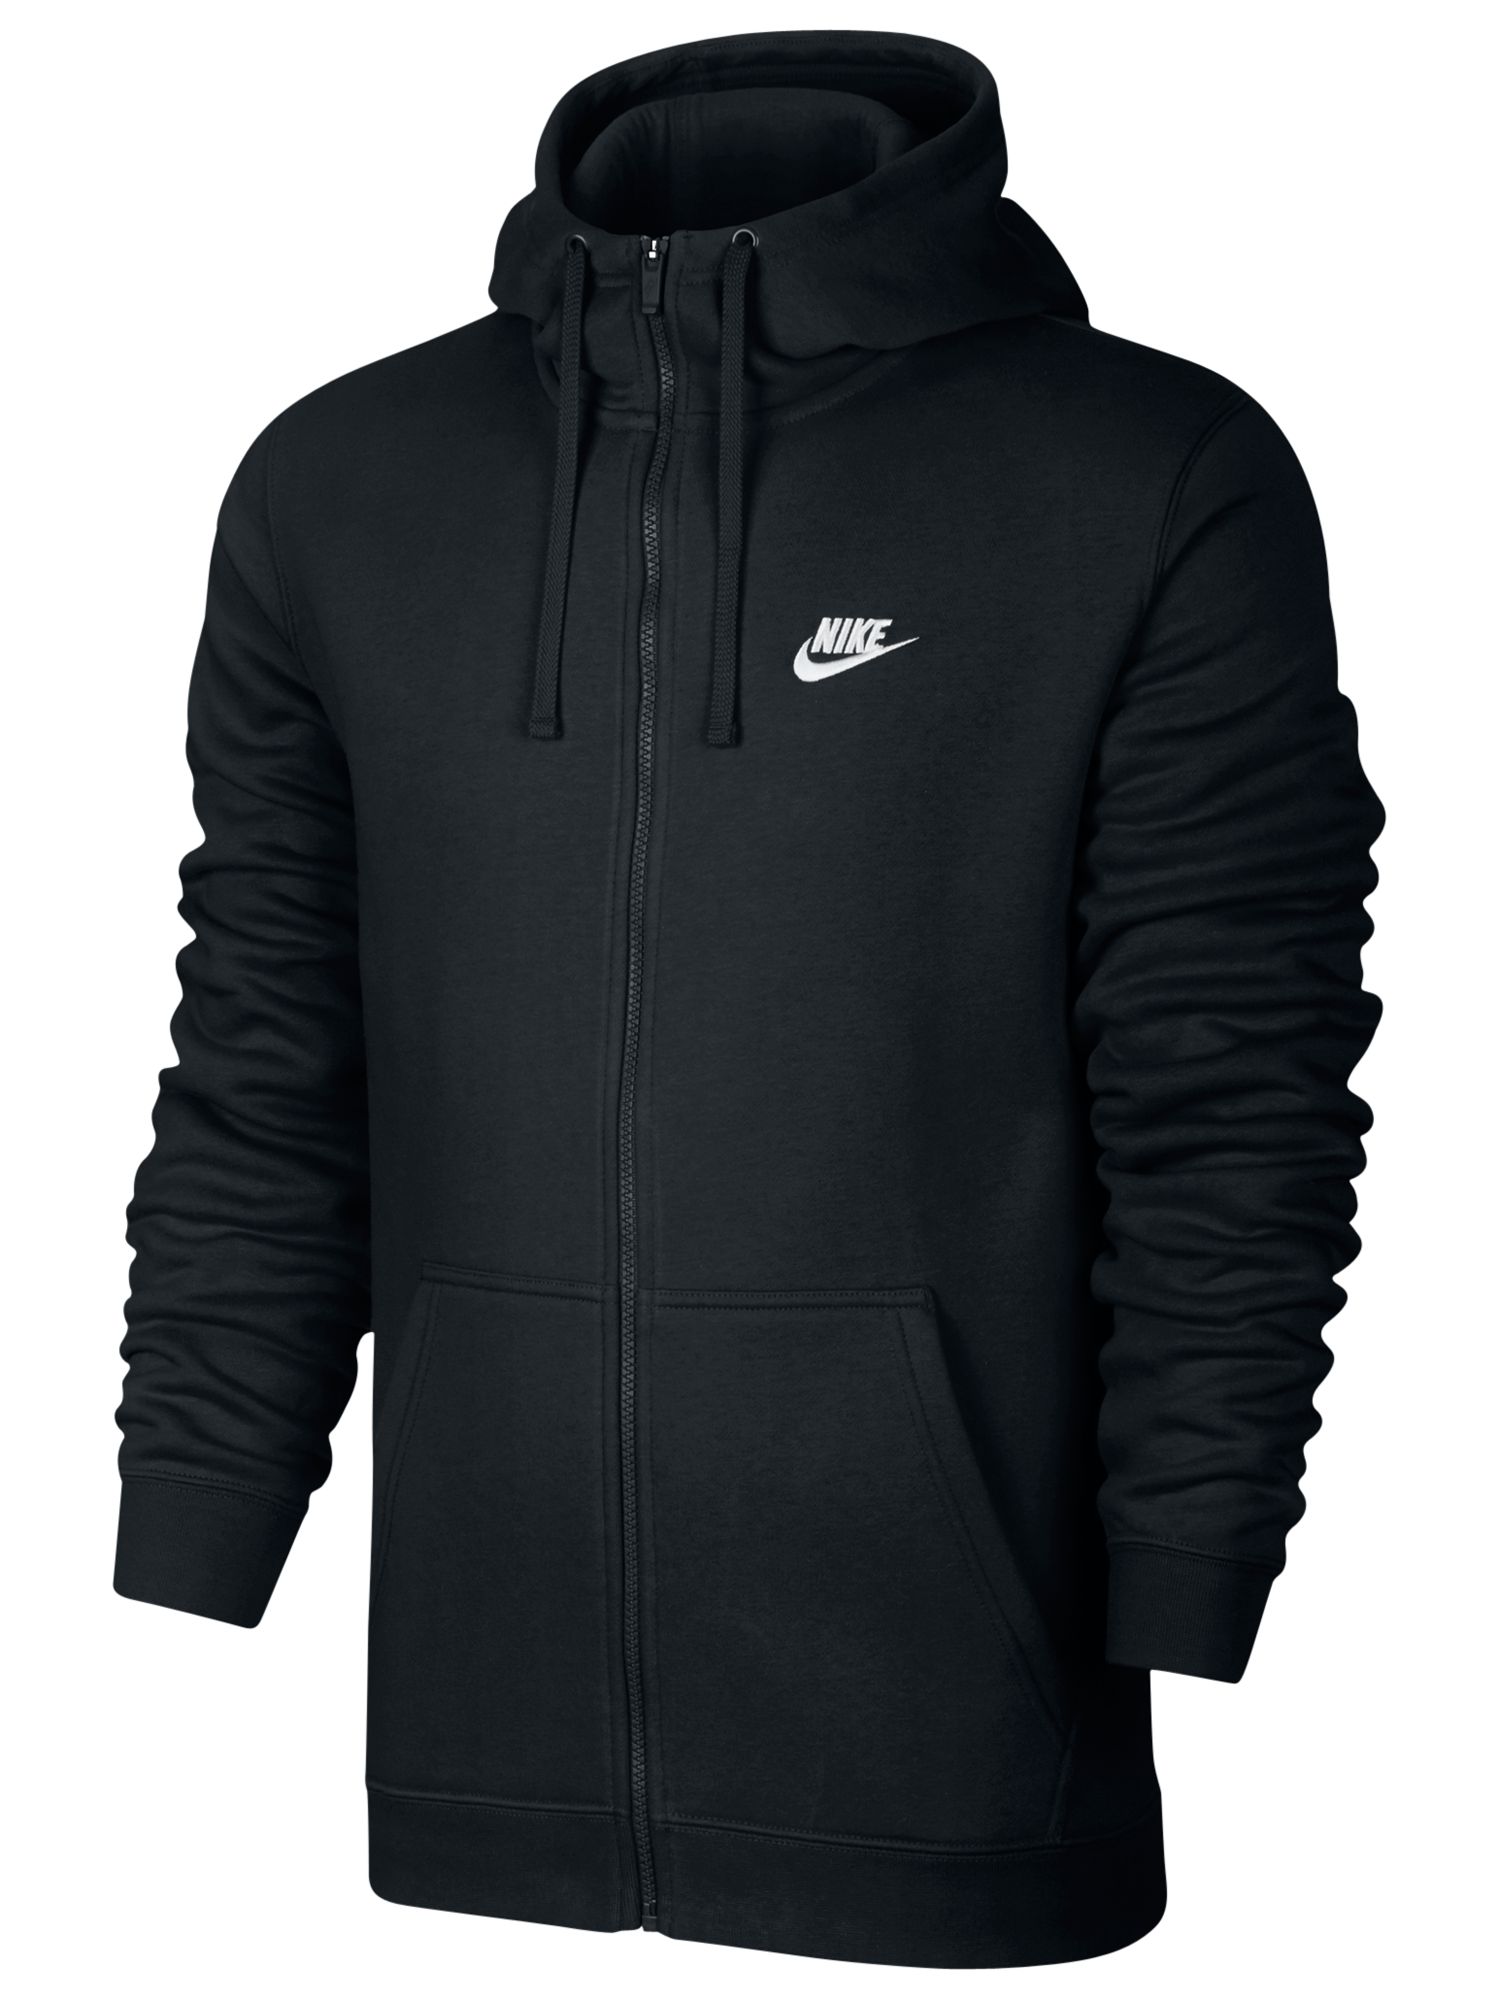 Nike Sportswear Hoodie, Black/White, L